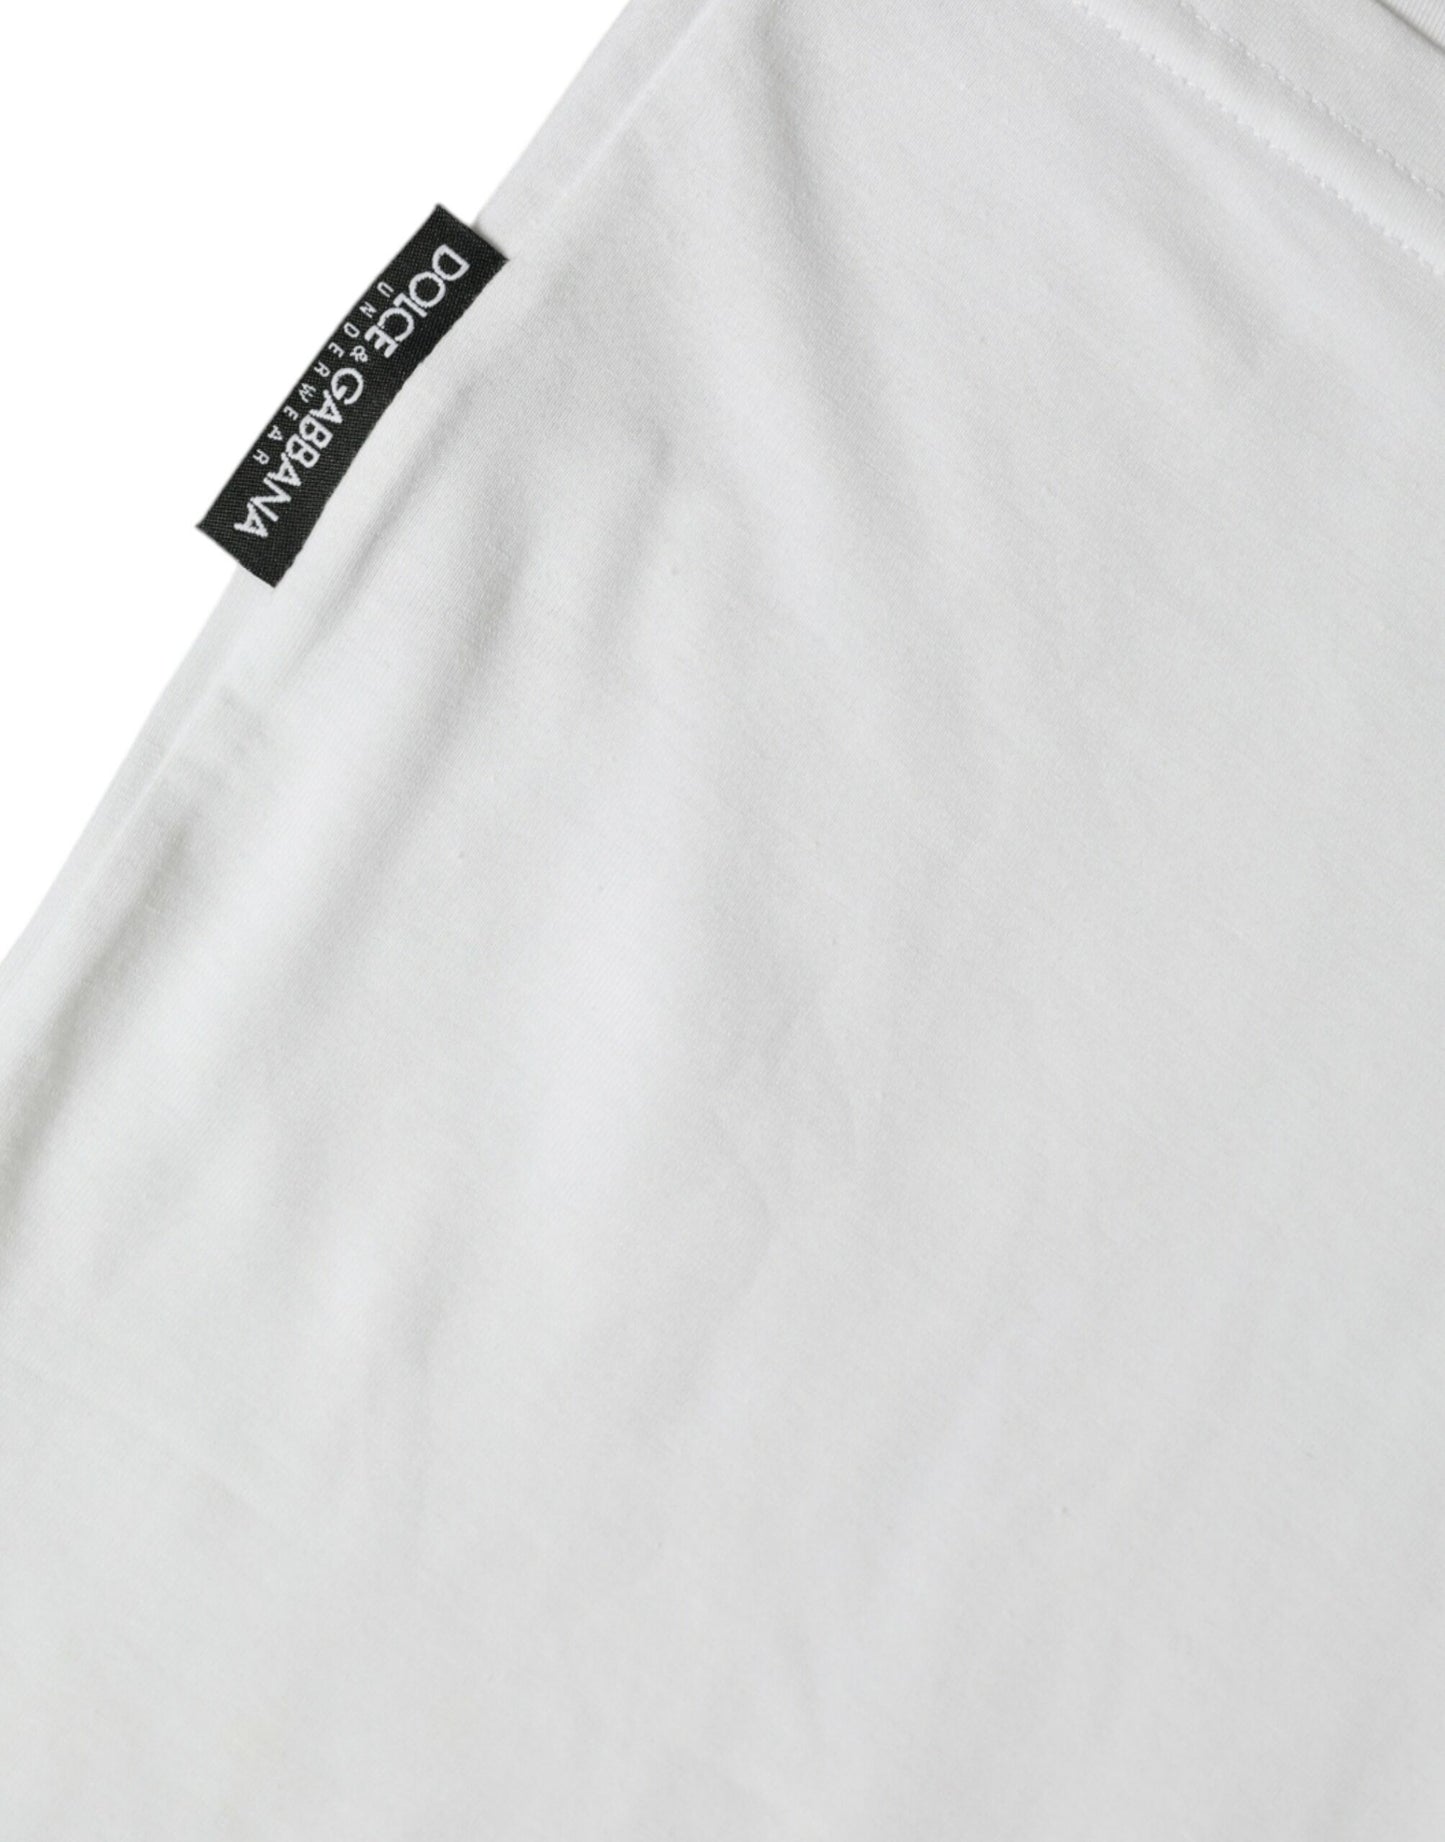 Dolce & Gabbana White Cotton V-neck Short Sleeve Underwear T-shirt